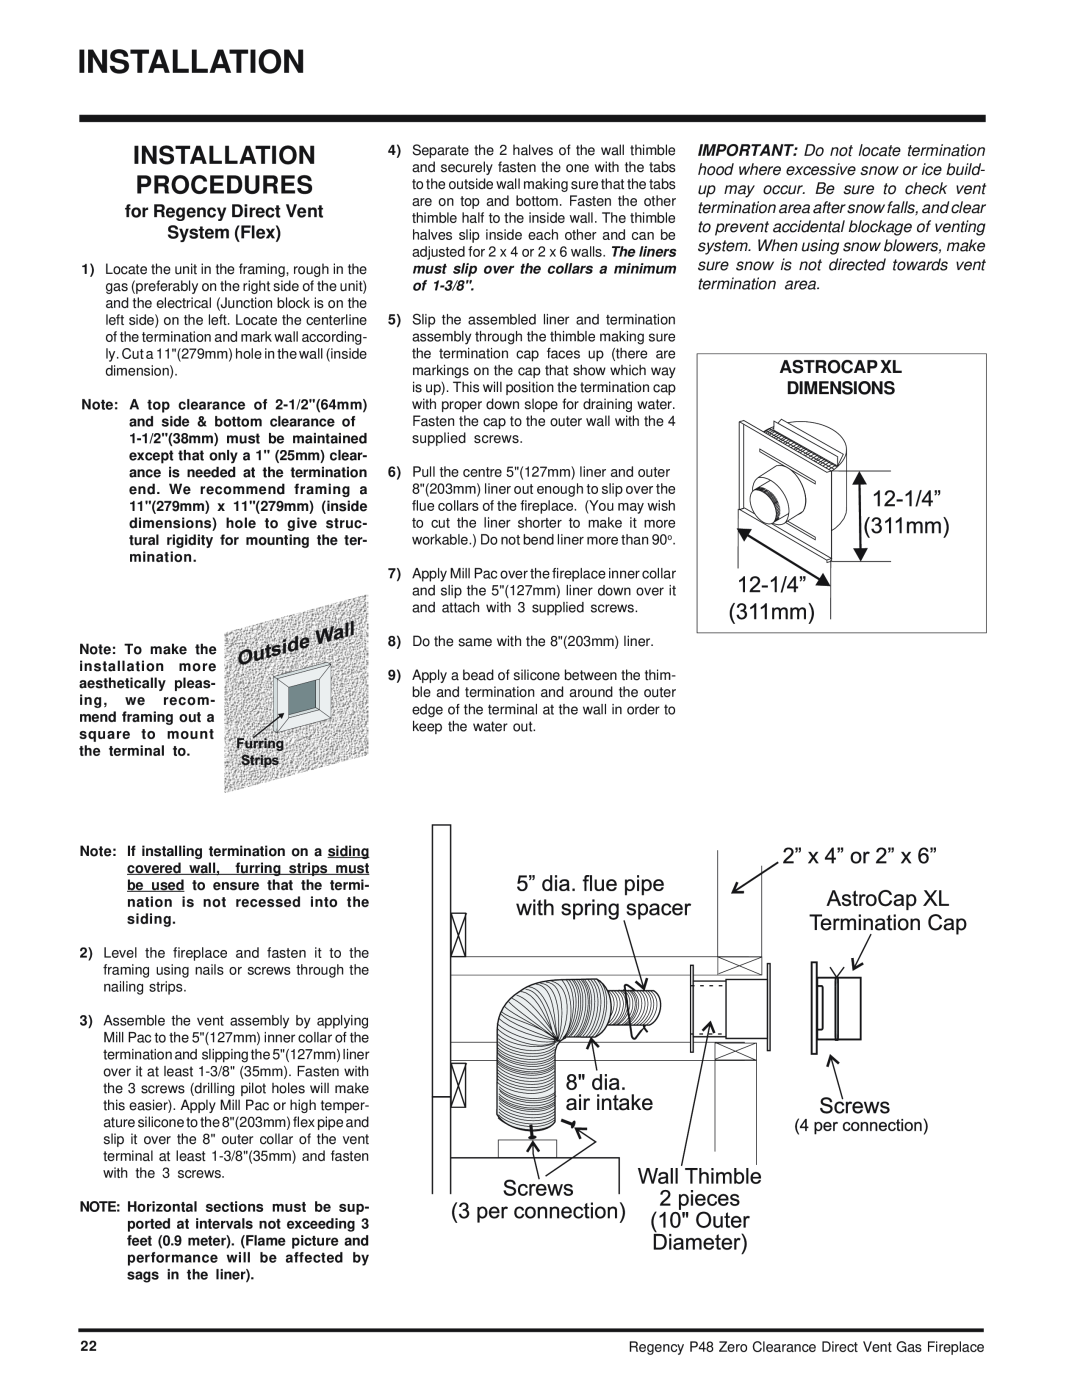 Regency P48-NG, P48-LP Installation Procedures, for Regency Direct Vent System Flex, Astrocap Xl Dimensions 